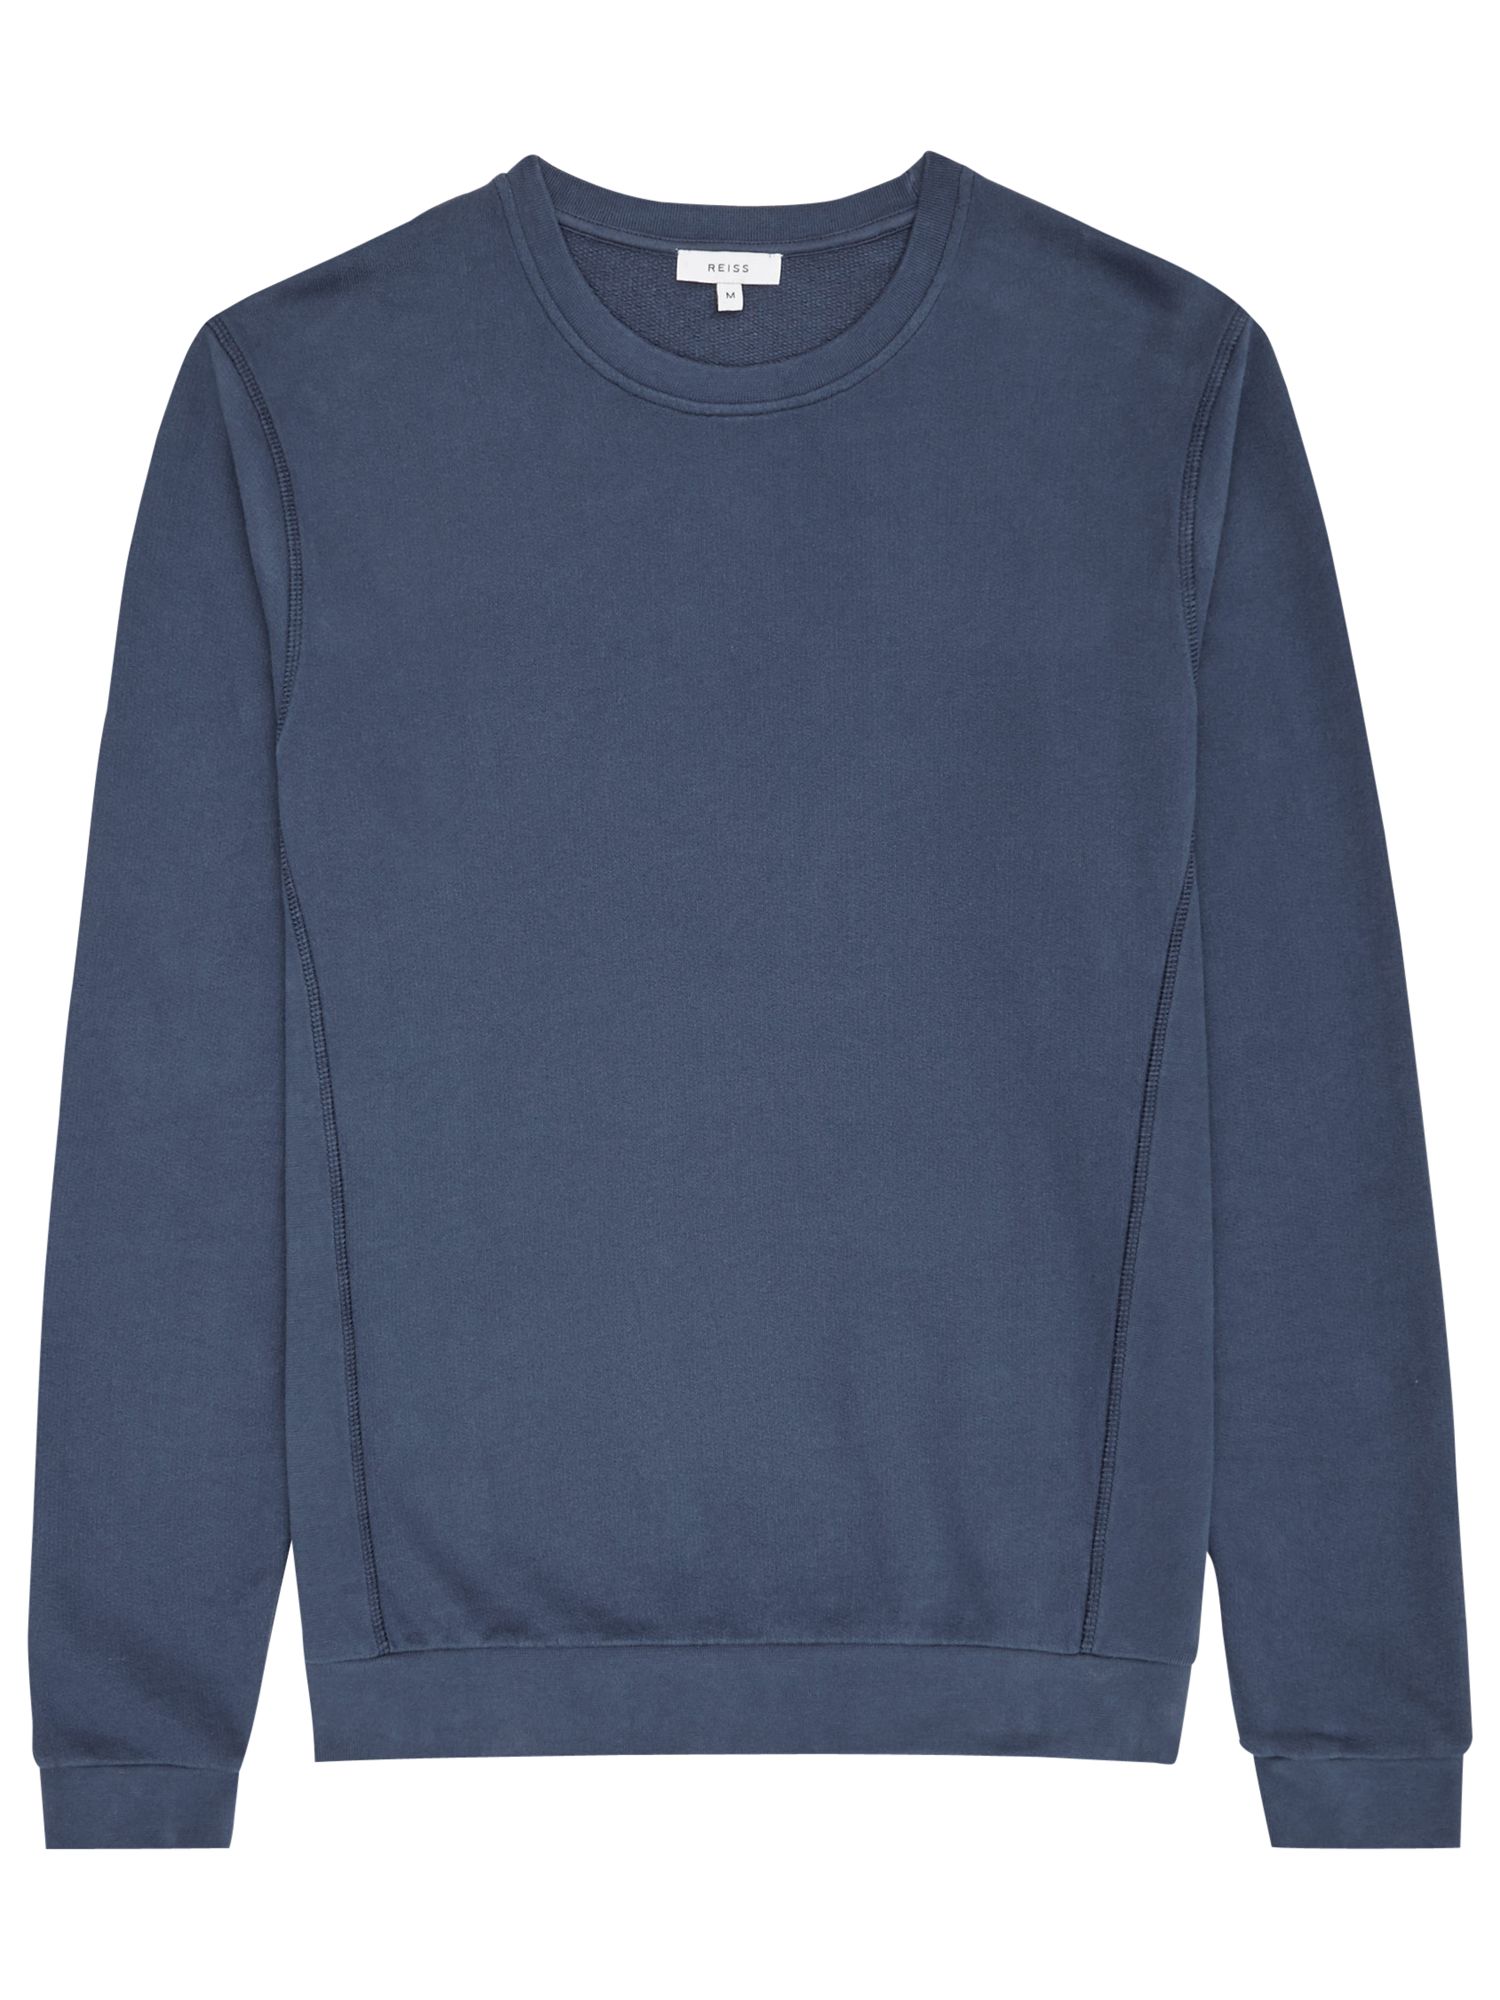 Blue Cotton Sweatshirt Deals, 53% OFF | www.ingeniovirtual.com